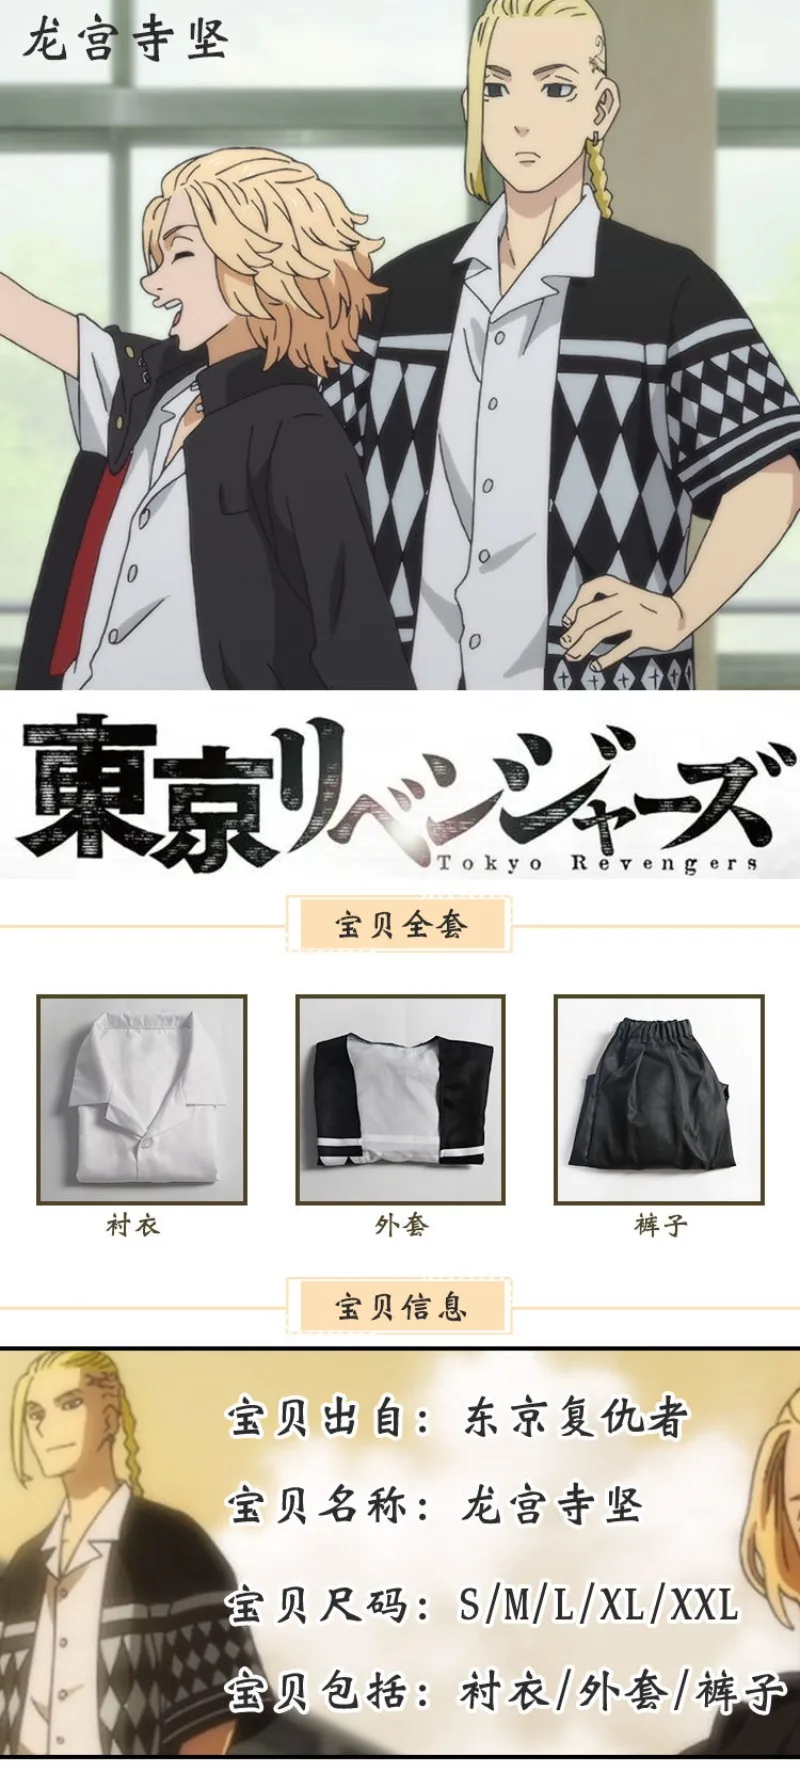 Anime Tokyo Revengers Draken Ken RYUGUJI Cosplay Costume Uniform